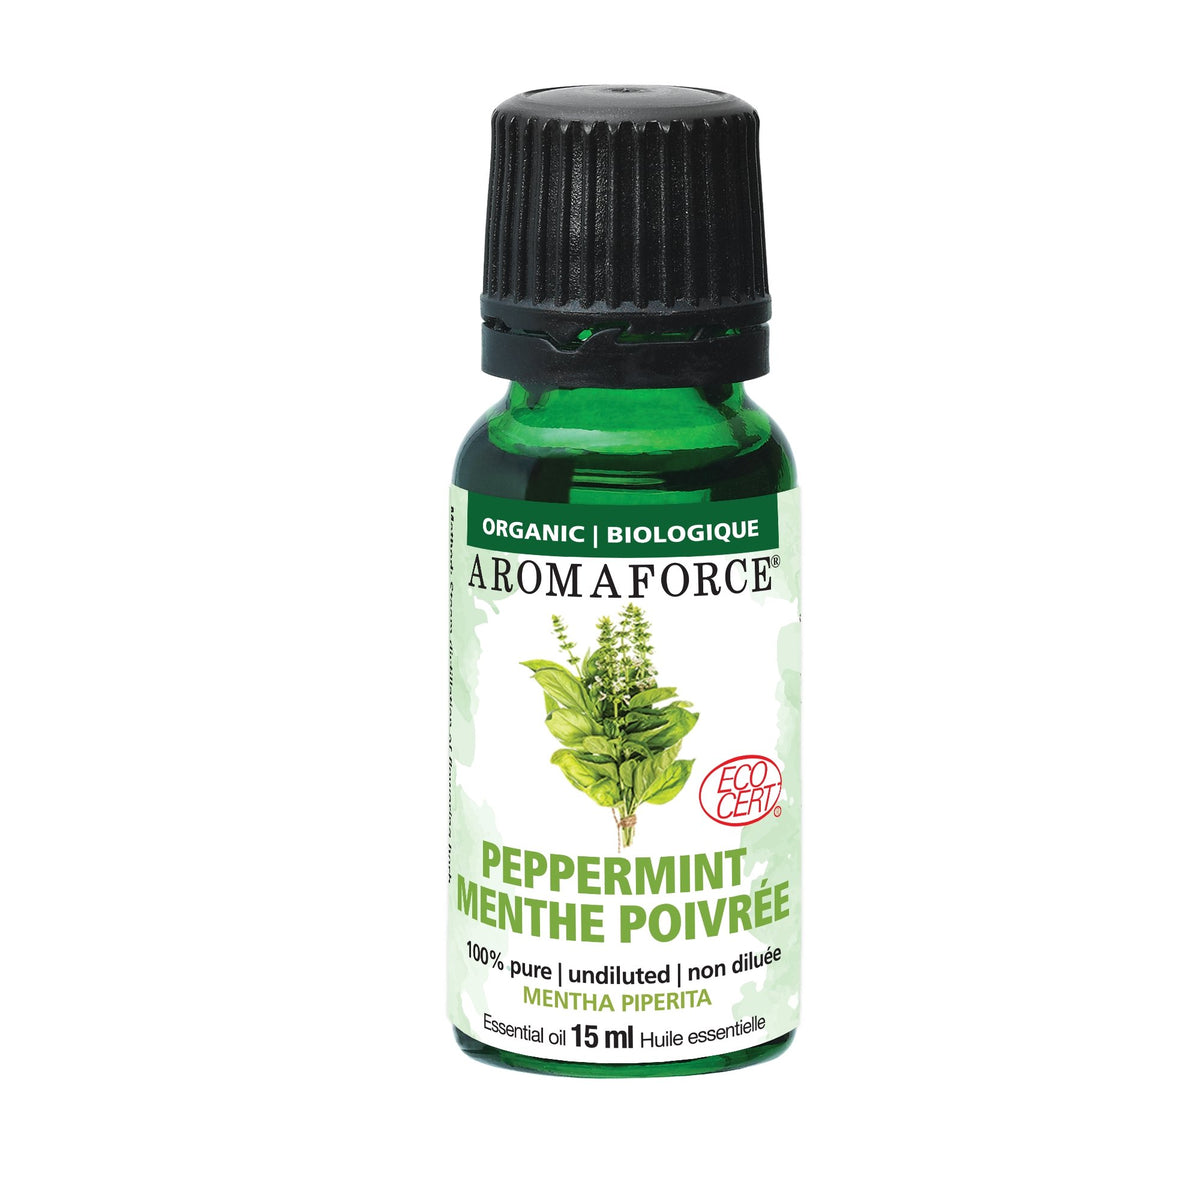 Aromaforce Peppermint Organic Essential Oil 15mL - A.Vogel Canada